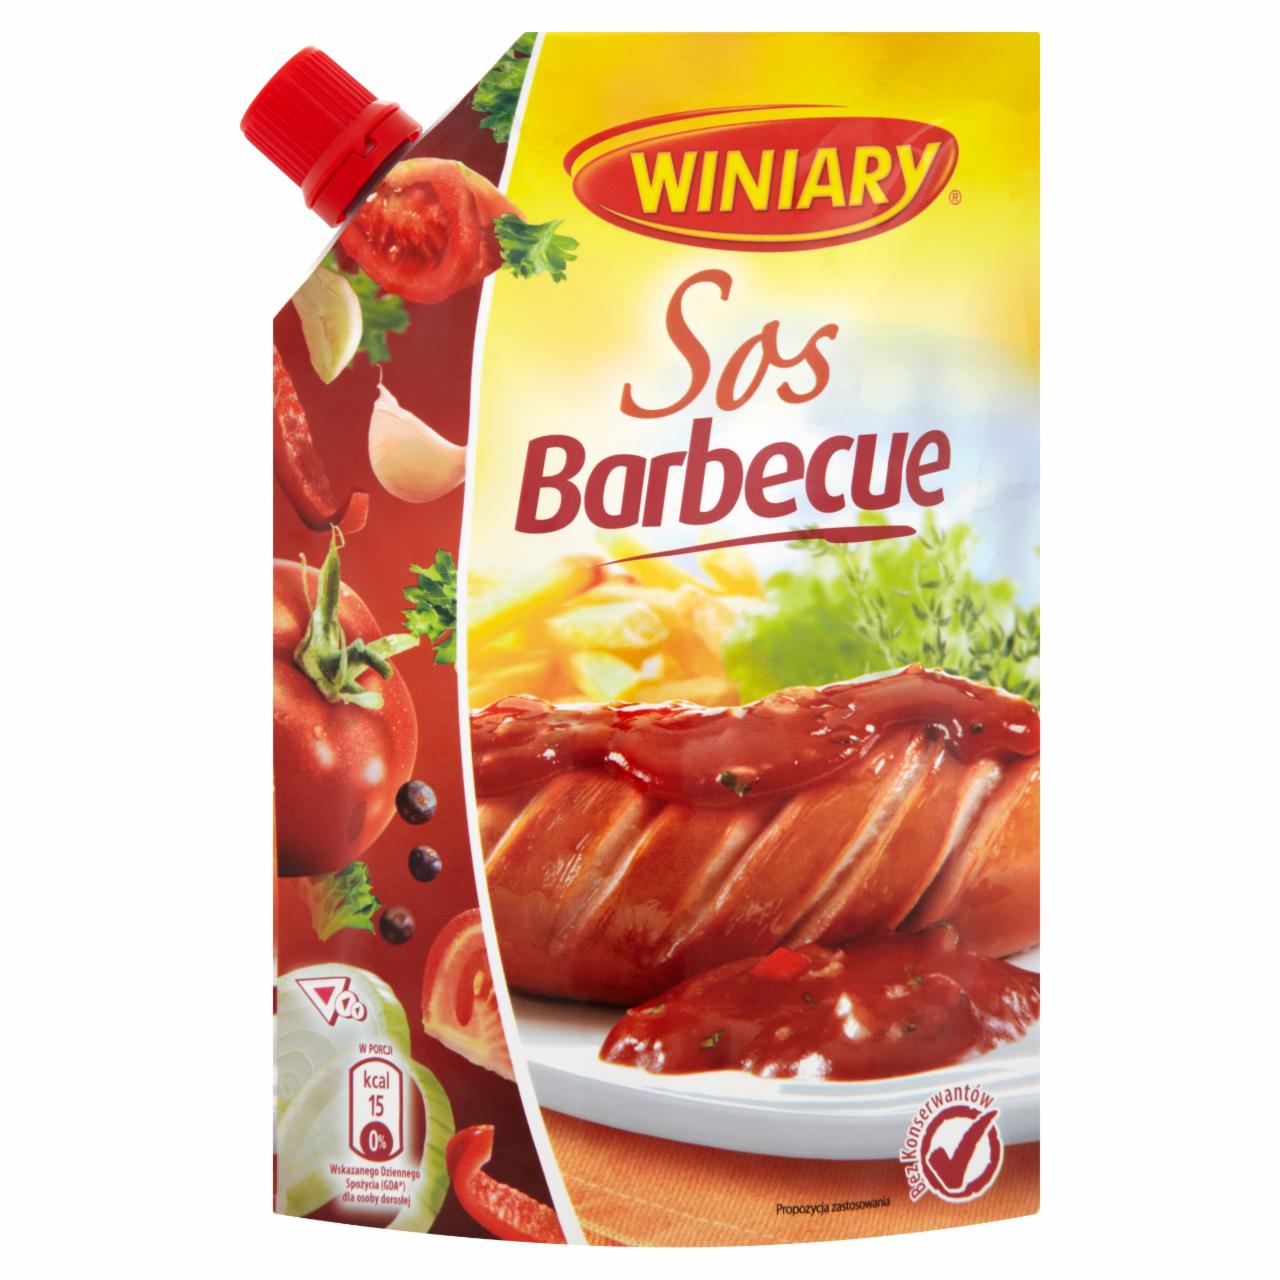 Zdjęcia - Winiary Sos barbecue 250 g